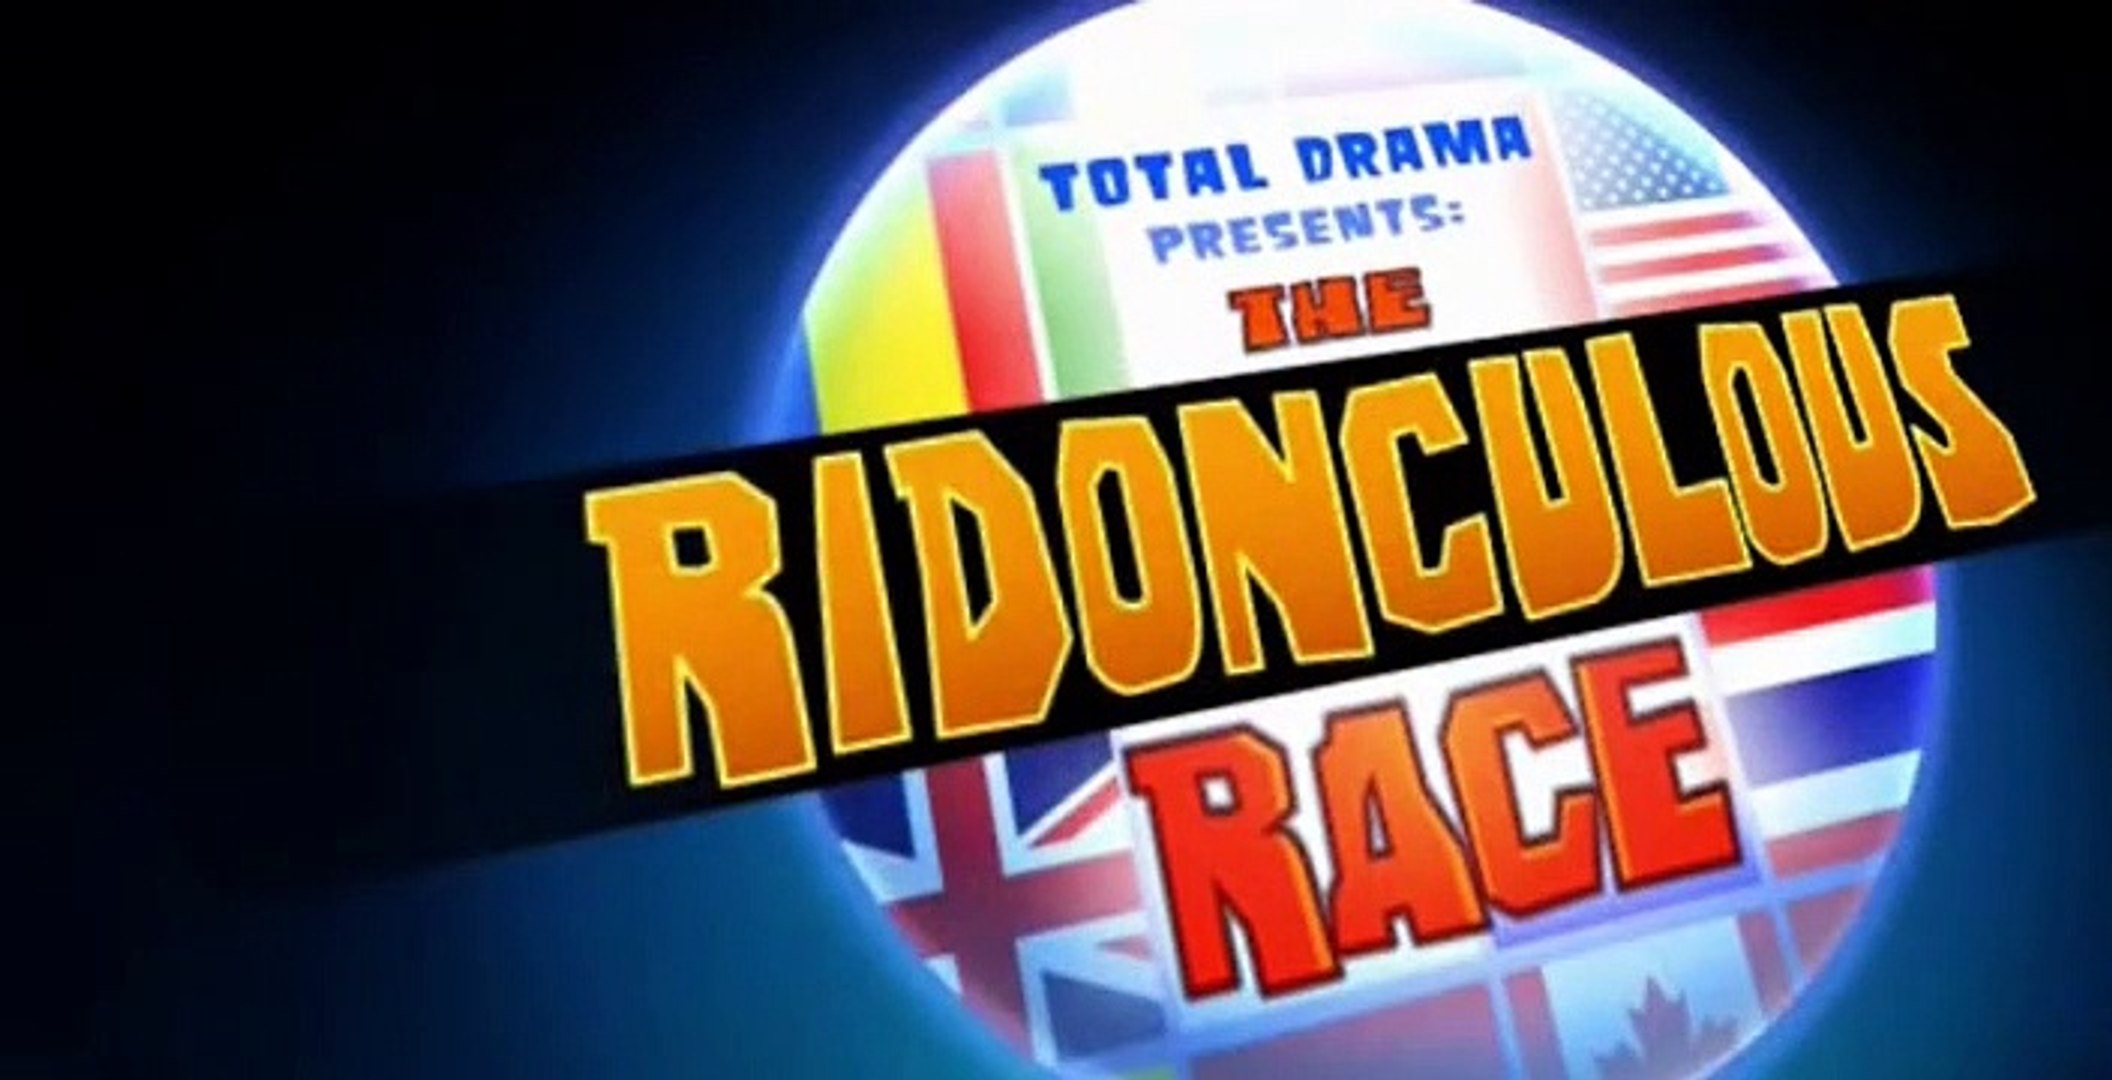 Total Drama Presents: The Ridonculous Race-Episode 5-Bjorken Telephone HD  on Make a GIF